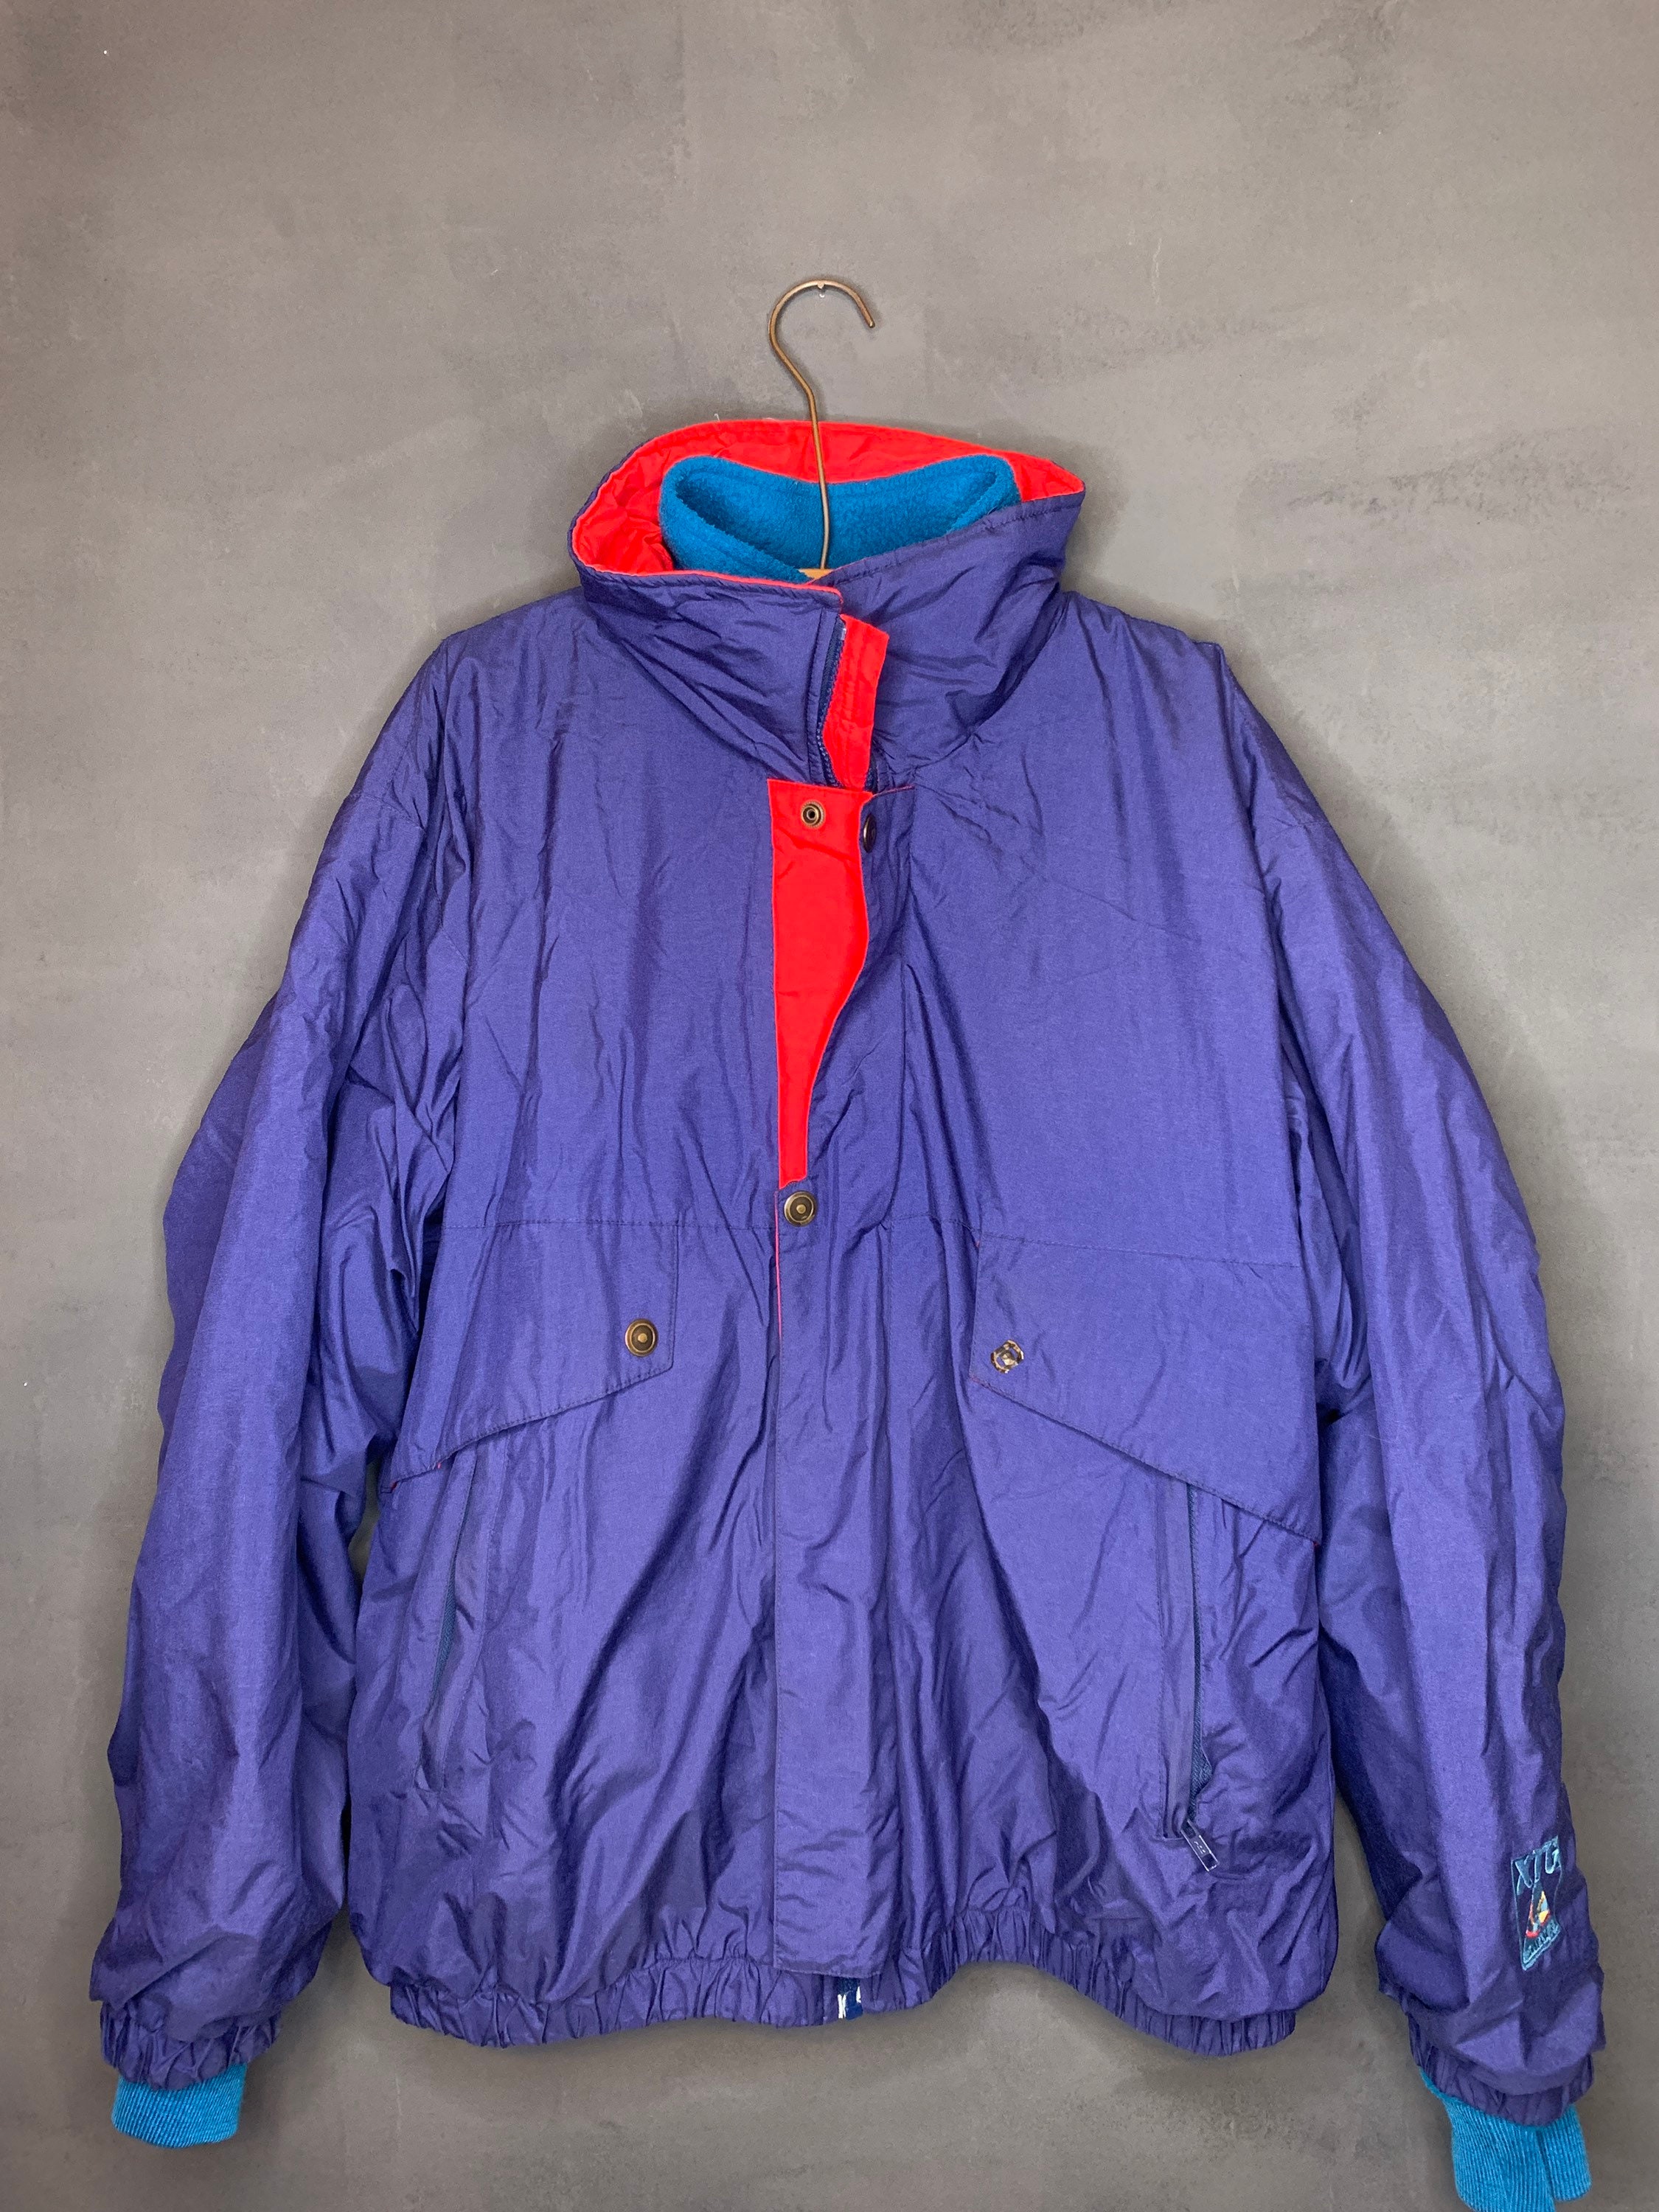 Vintage 90s sunice ski jacket double lined fleece | Etsy